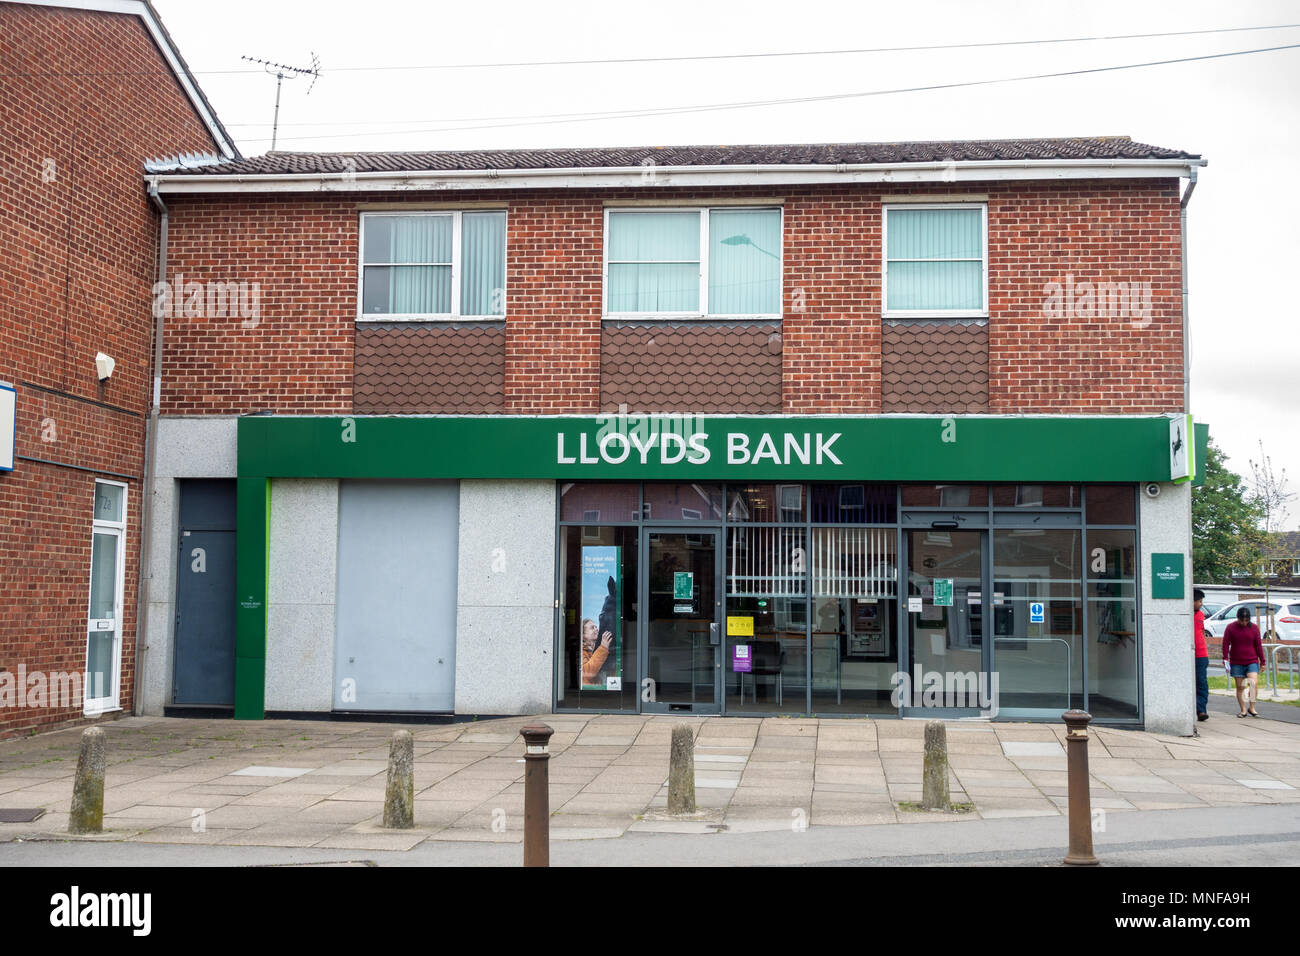 A branch of Lloyds bank in Tilehurst, Readng, UK. Stock Photo